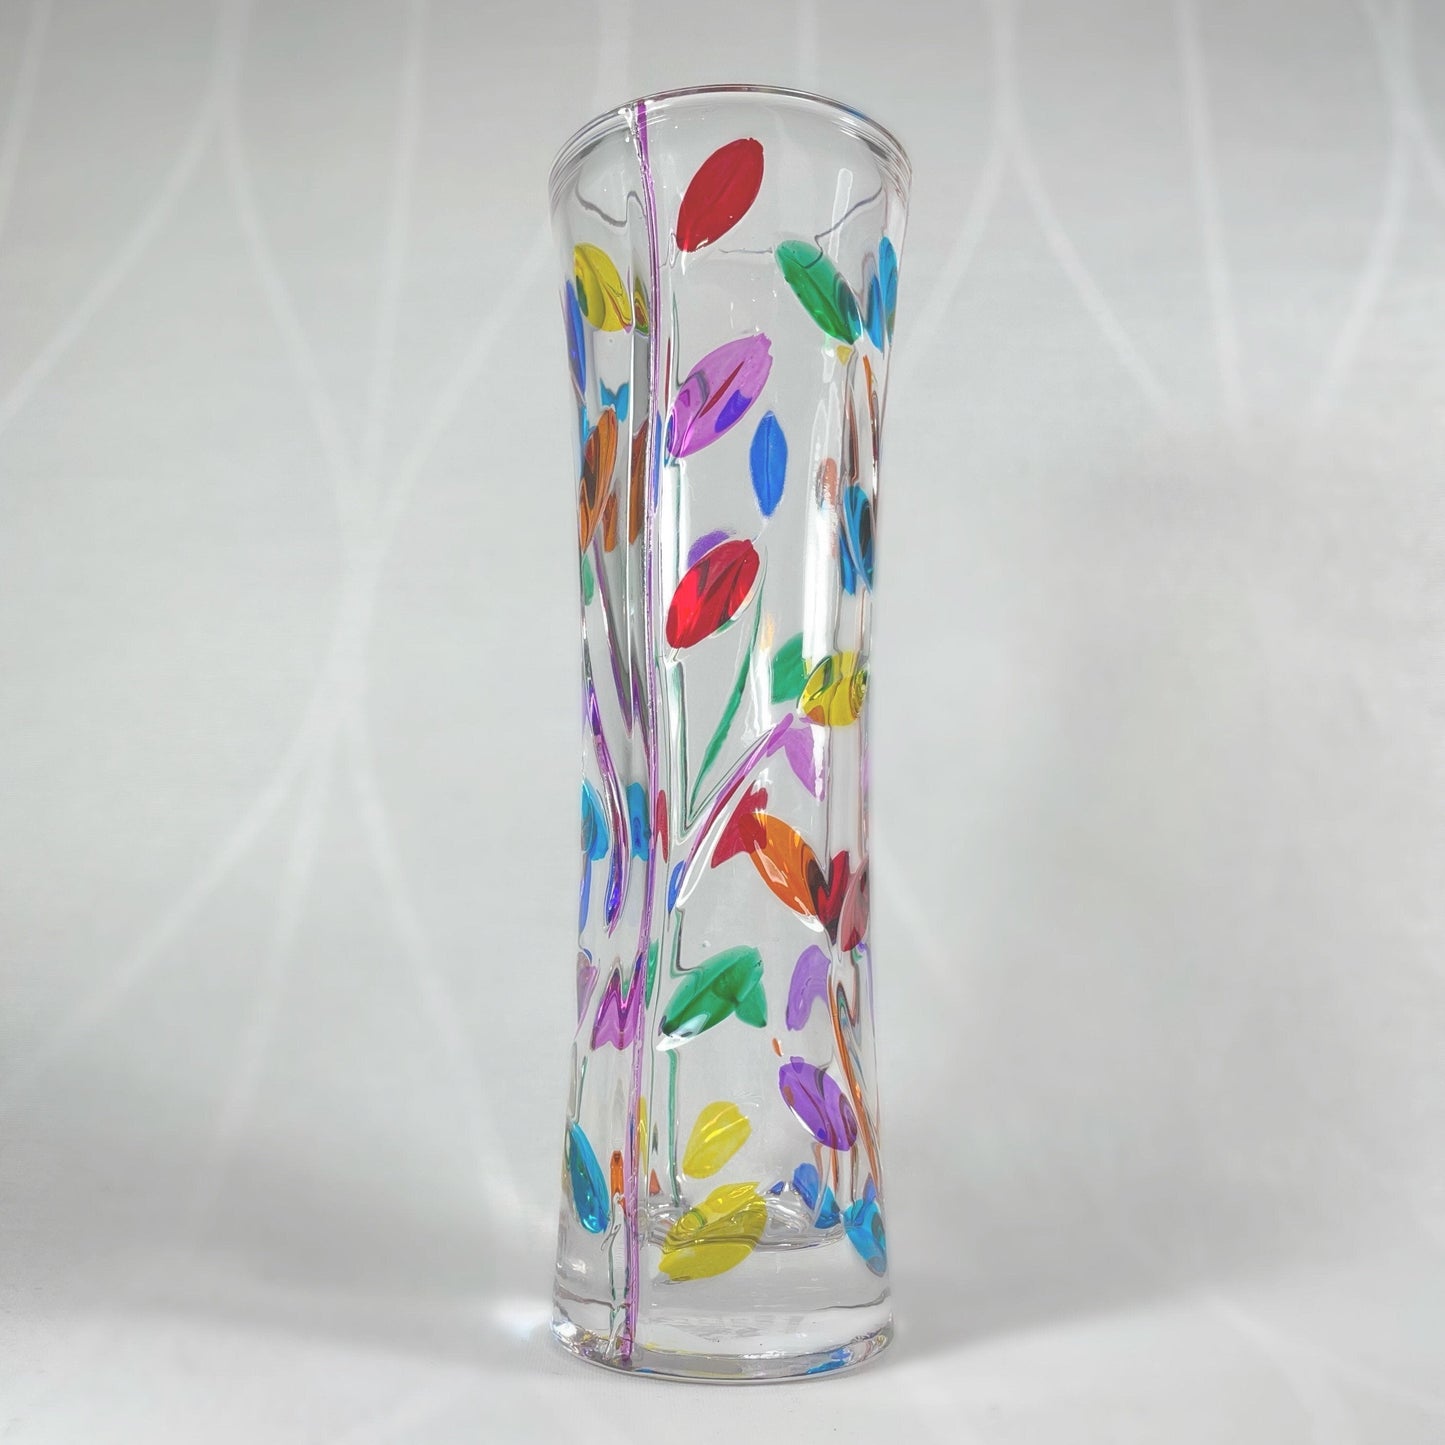 Venetian Glass Vase - Handmade in Italy, Colorful Murano Glass Vase